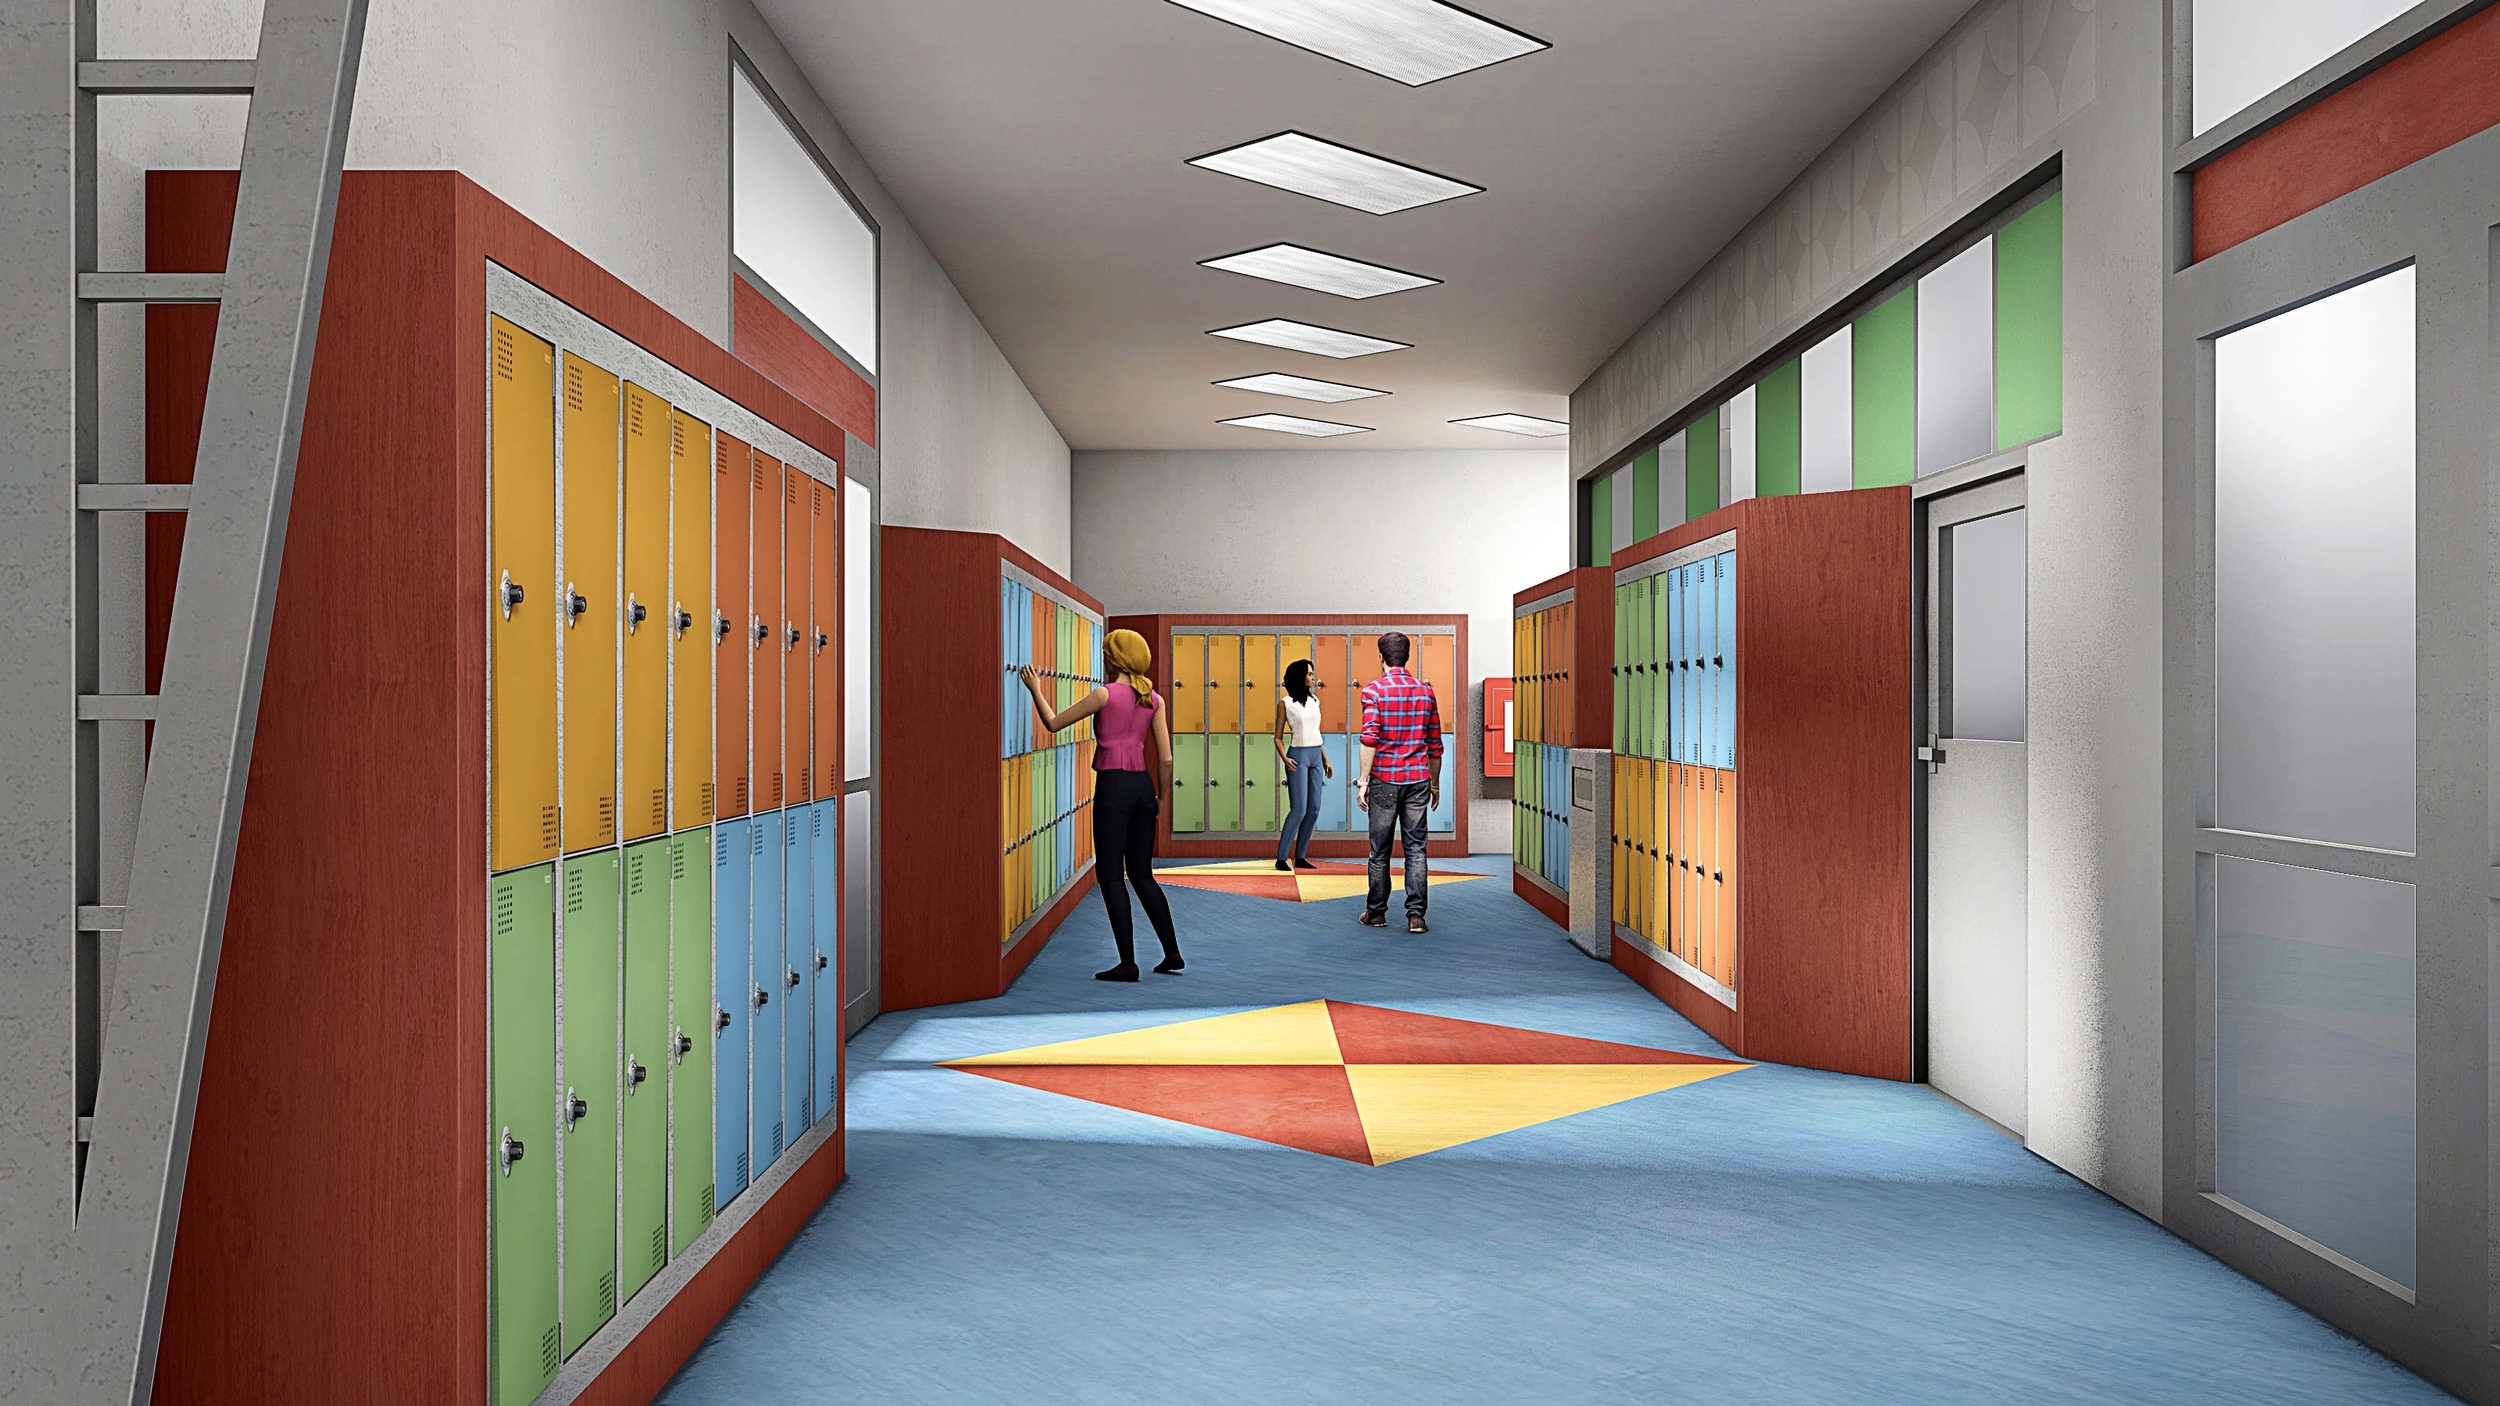  Summer Cove High School - School Corridor - Concept Art 